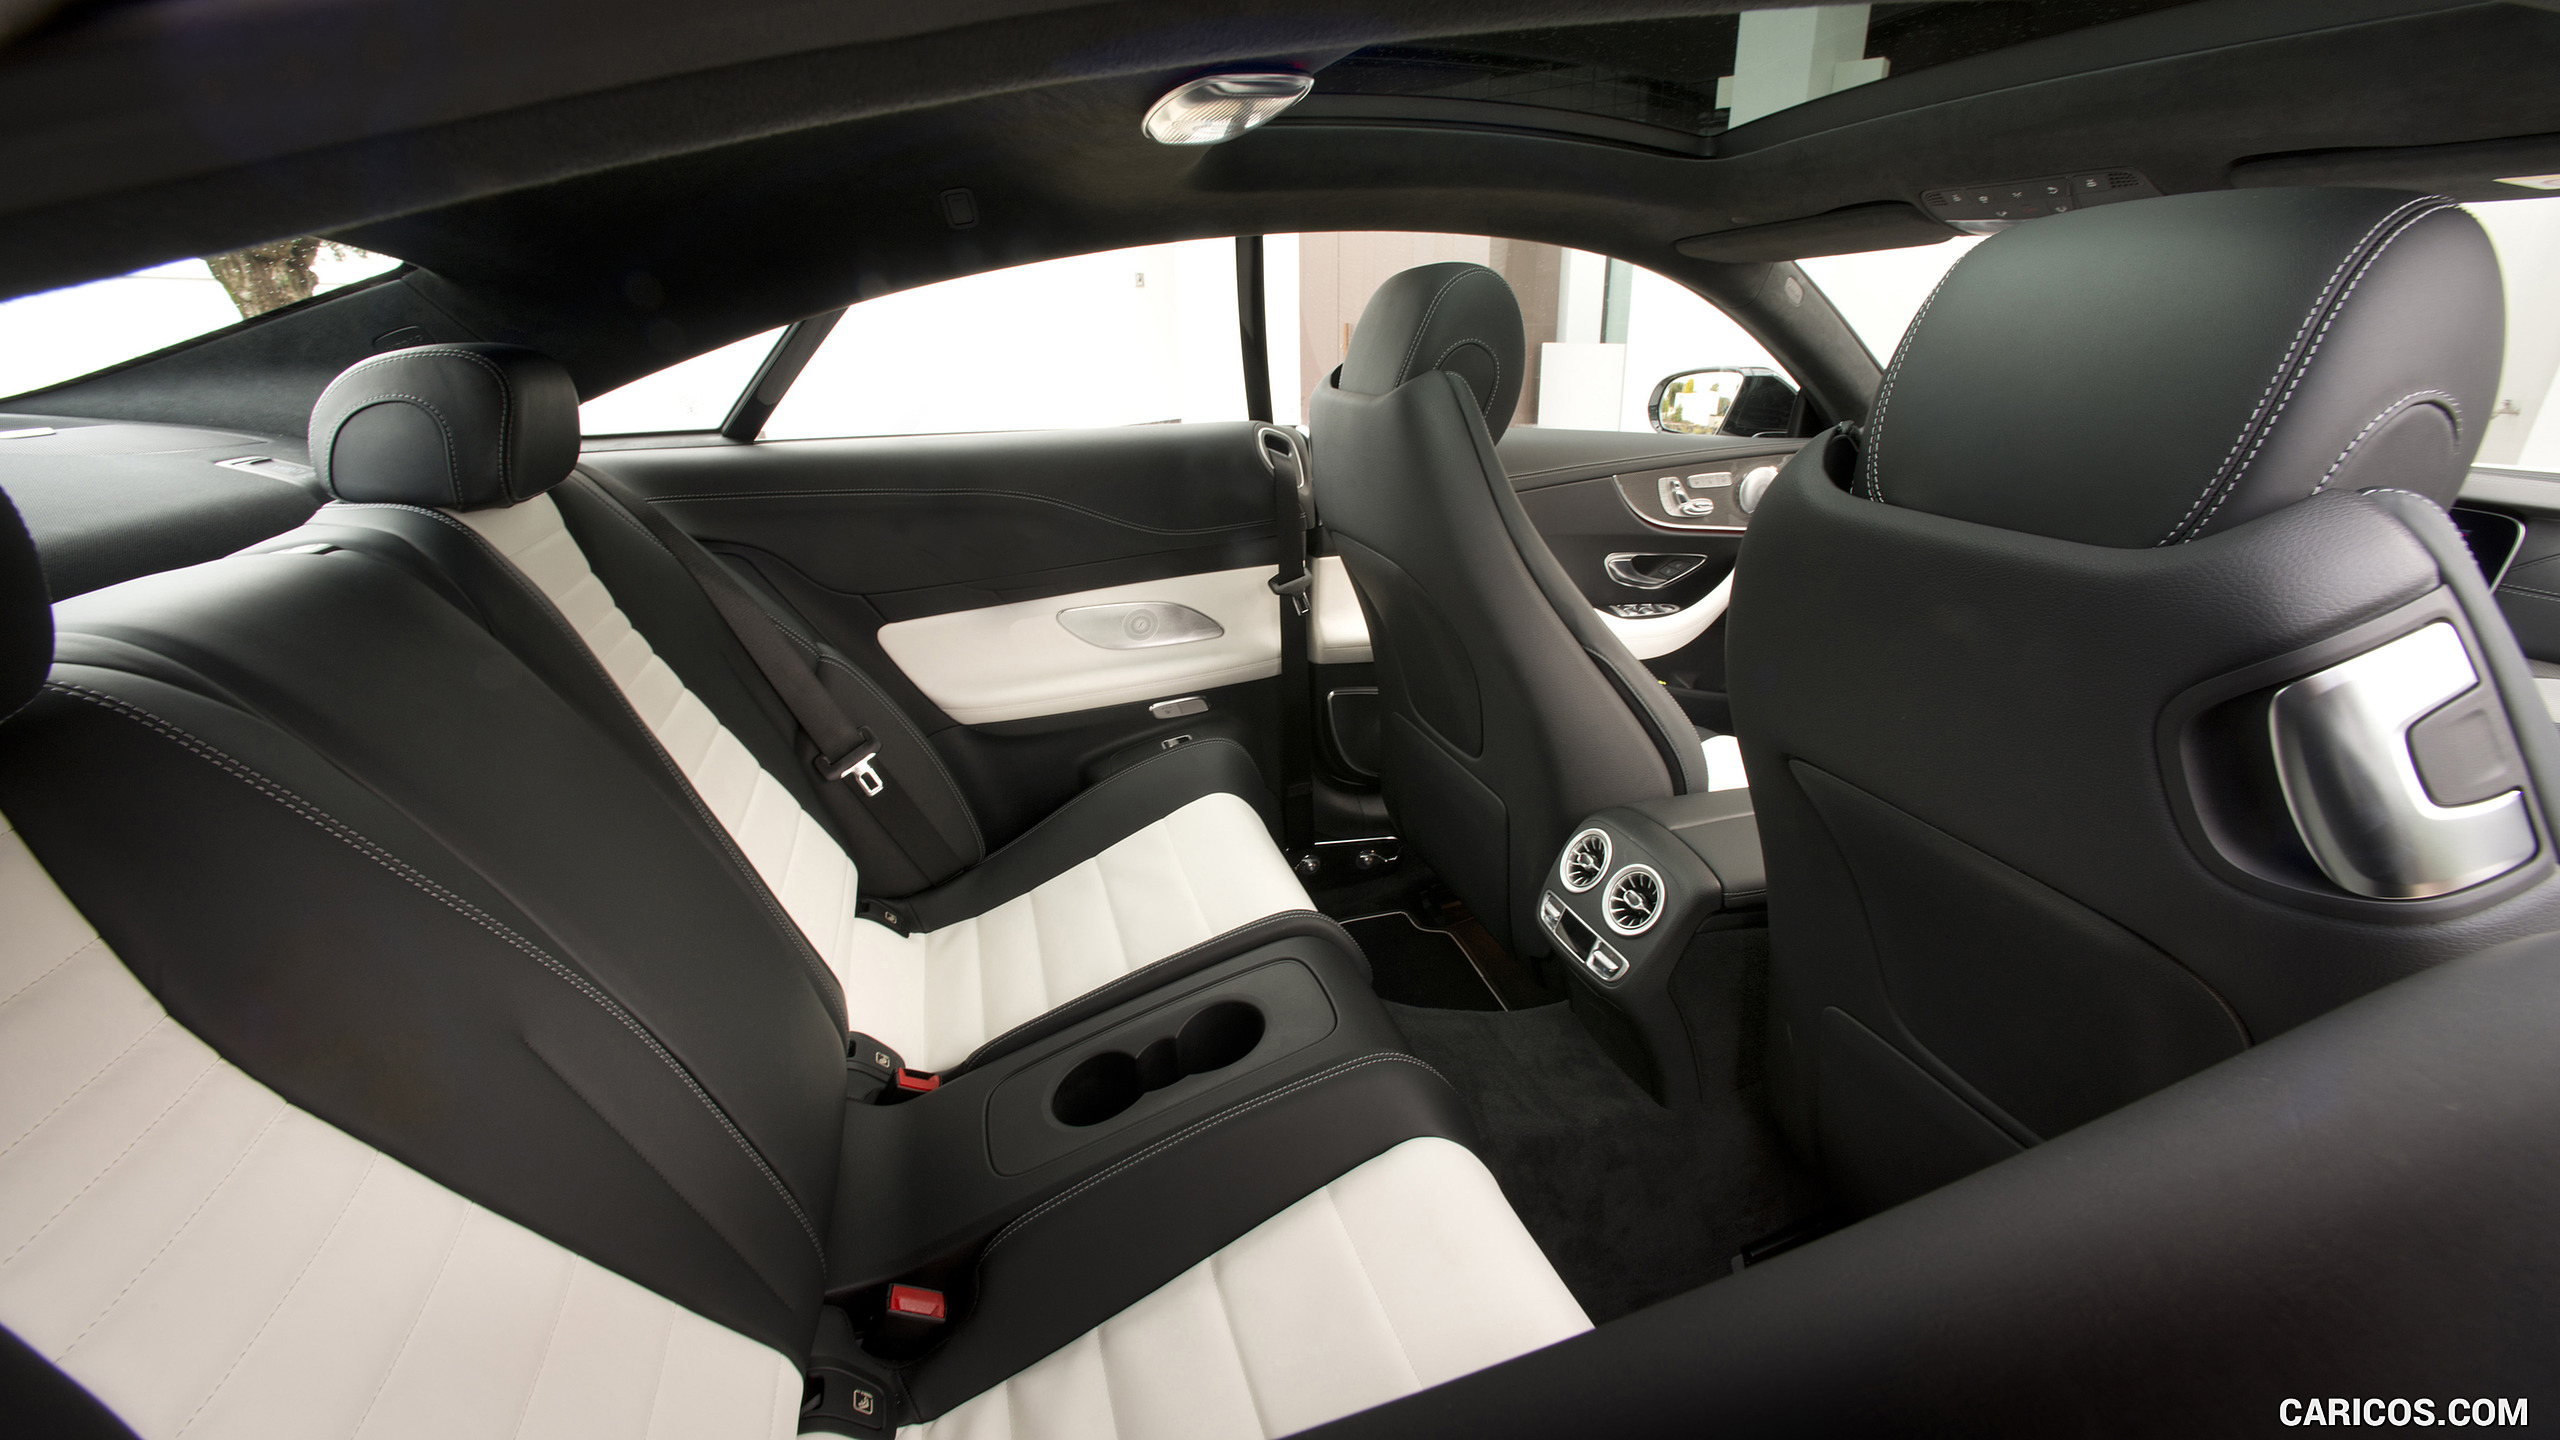 2018 Mercedes-Benz E400 Coupe 4MATIC - Interior, Rear Seats, #167 of 365